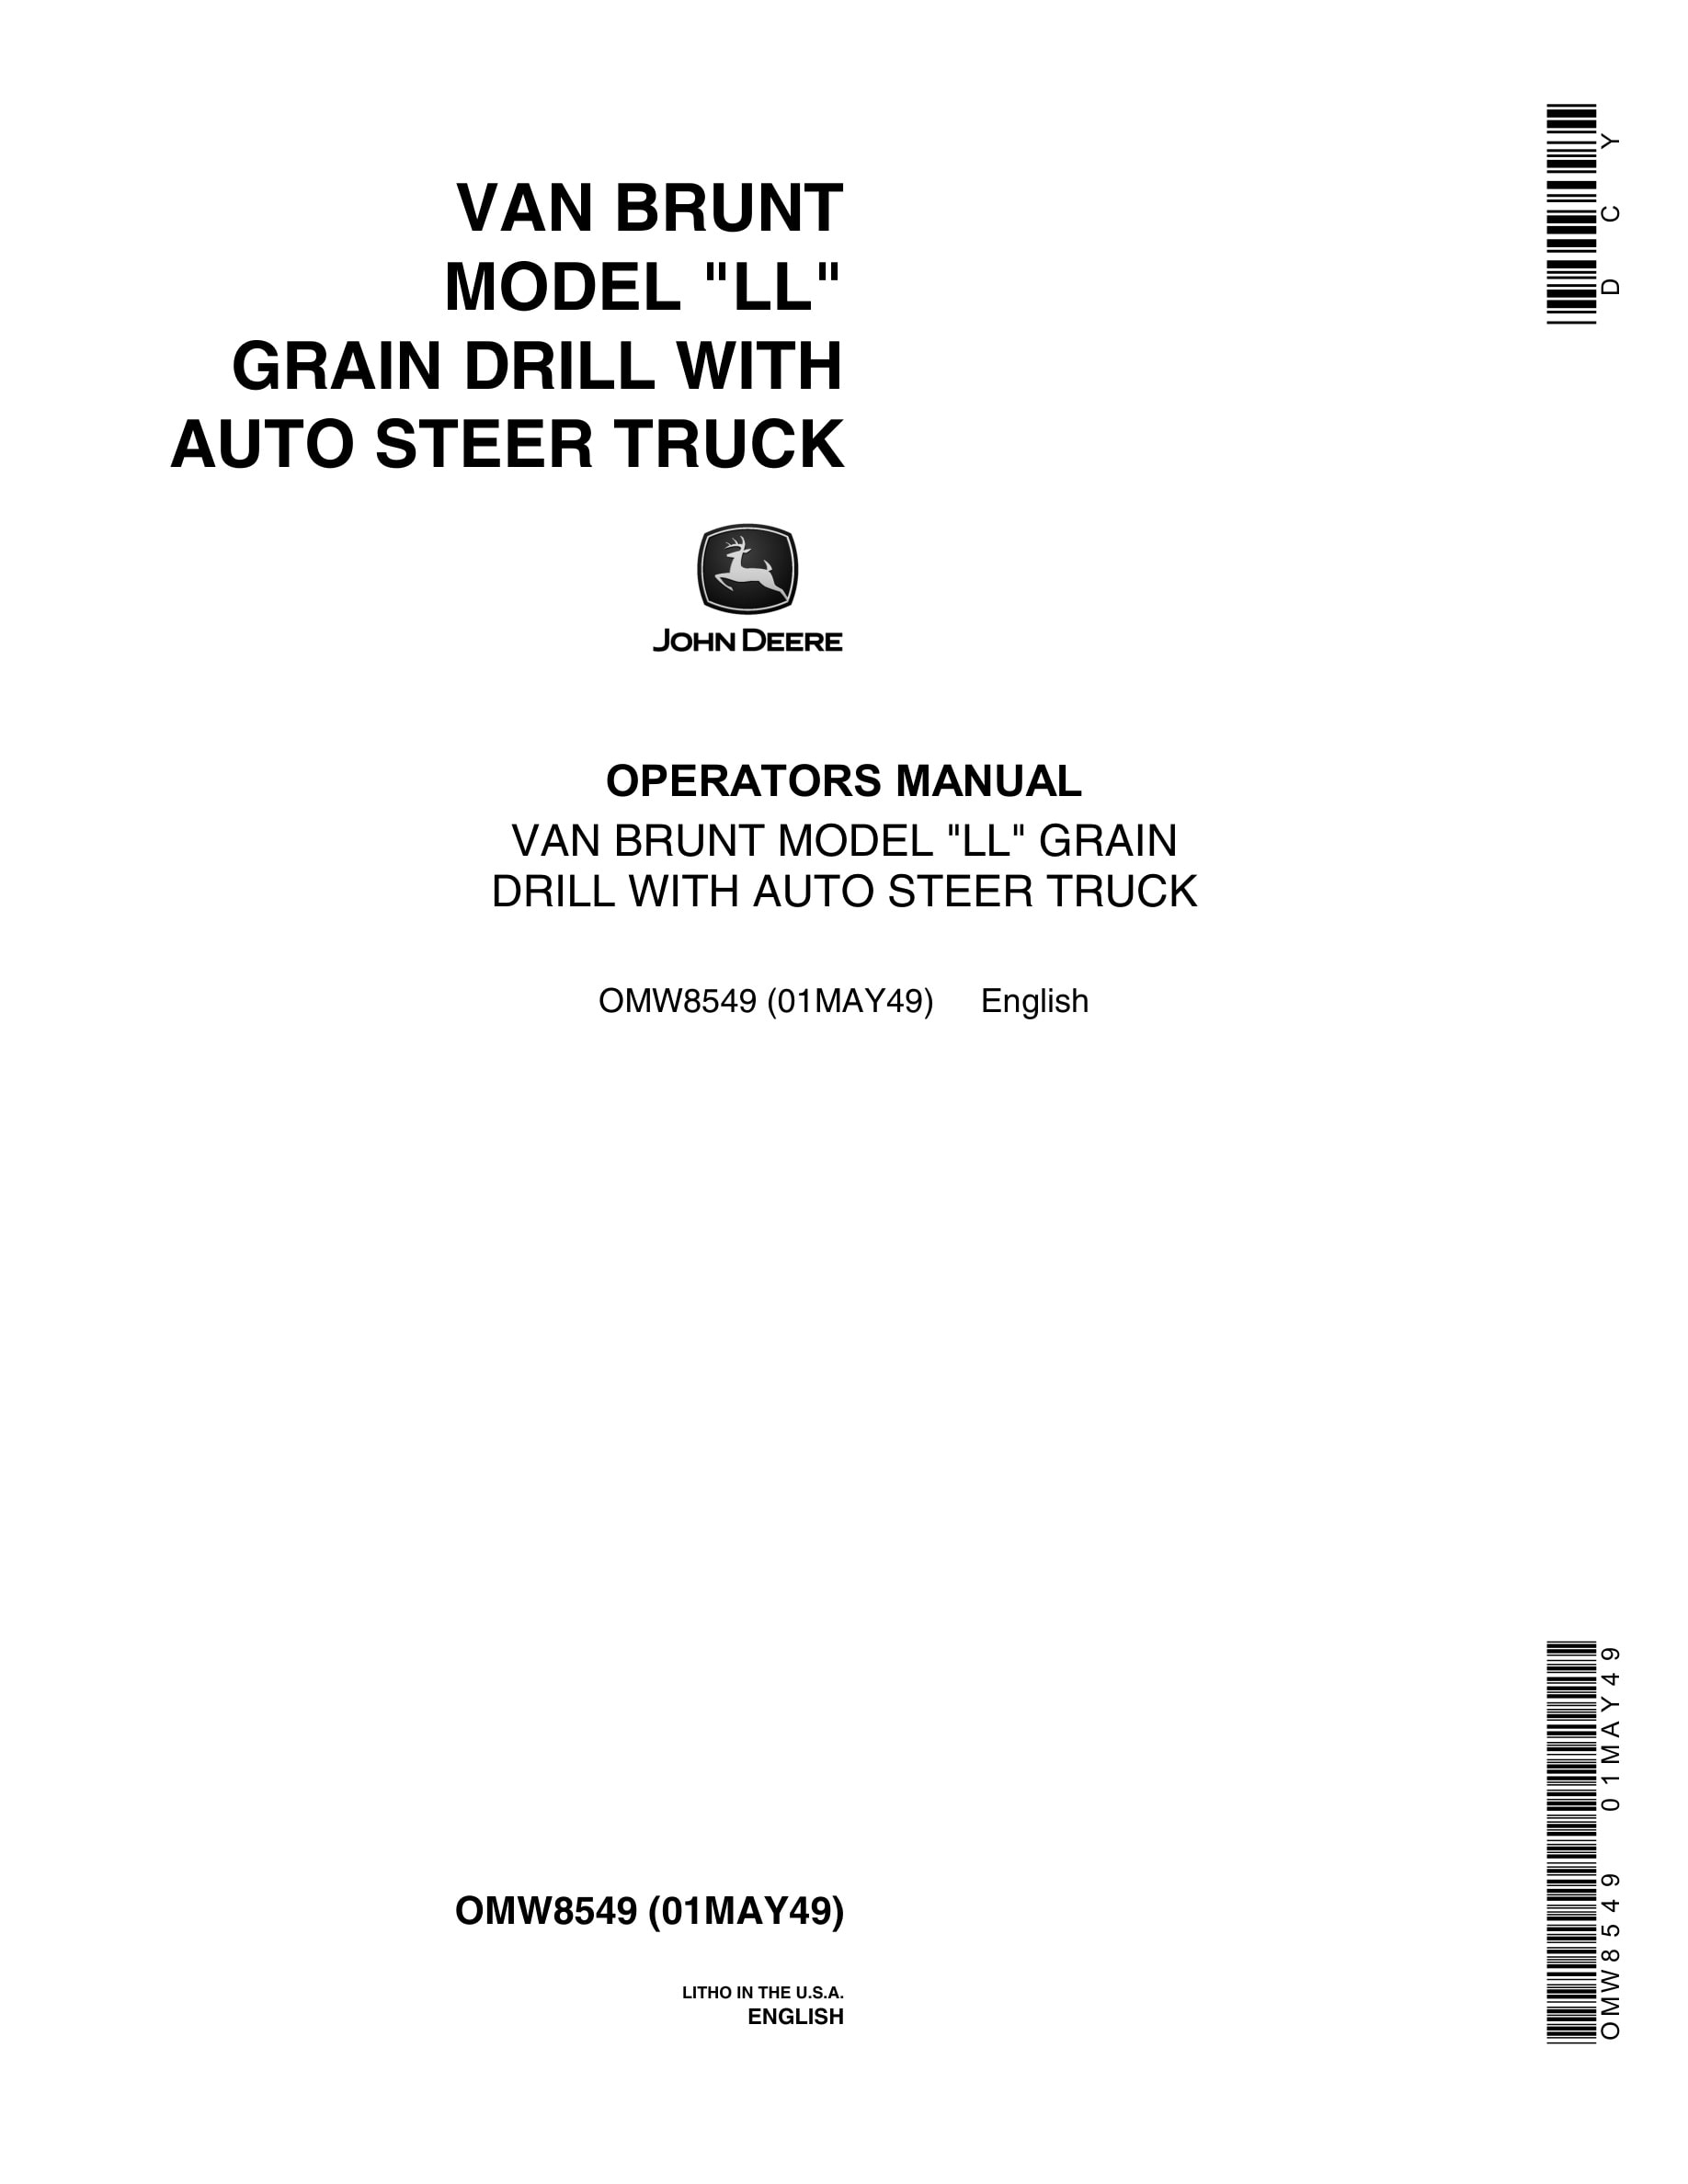 John Deere VAN BRUNT MODEL LL GRAIN DRILL WITH AUTO STEER TRUCK Operator Manual OMW8549-1